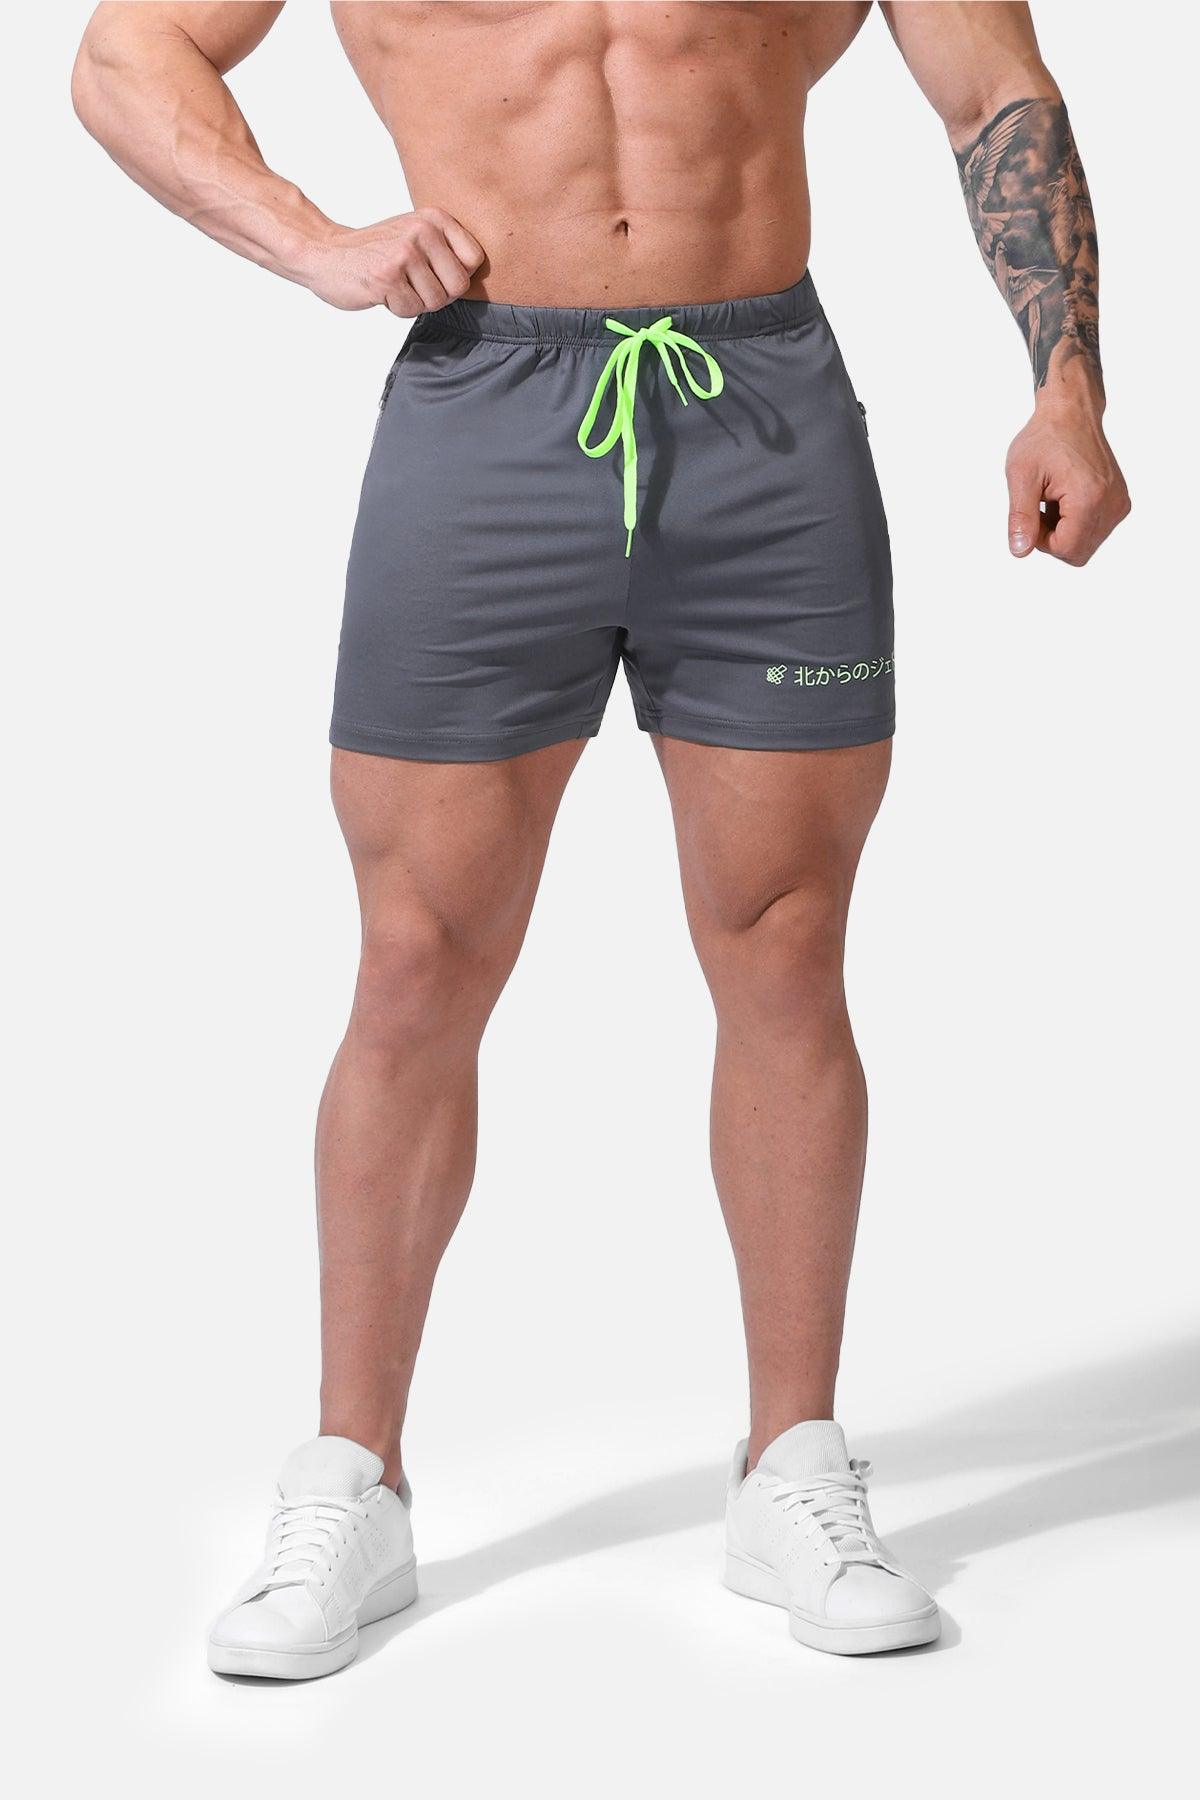 Agile Bodybuilding 4'' Shorts w Zipper Pockets - Japanese Gray - Jed North